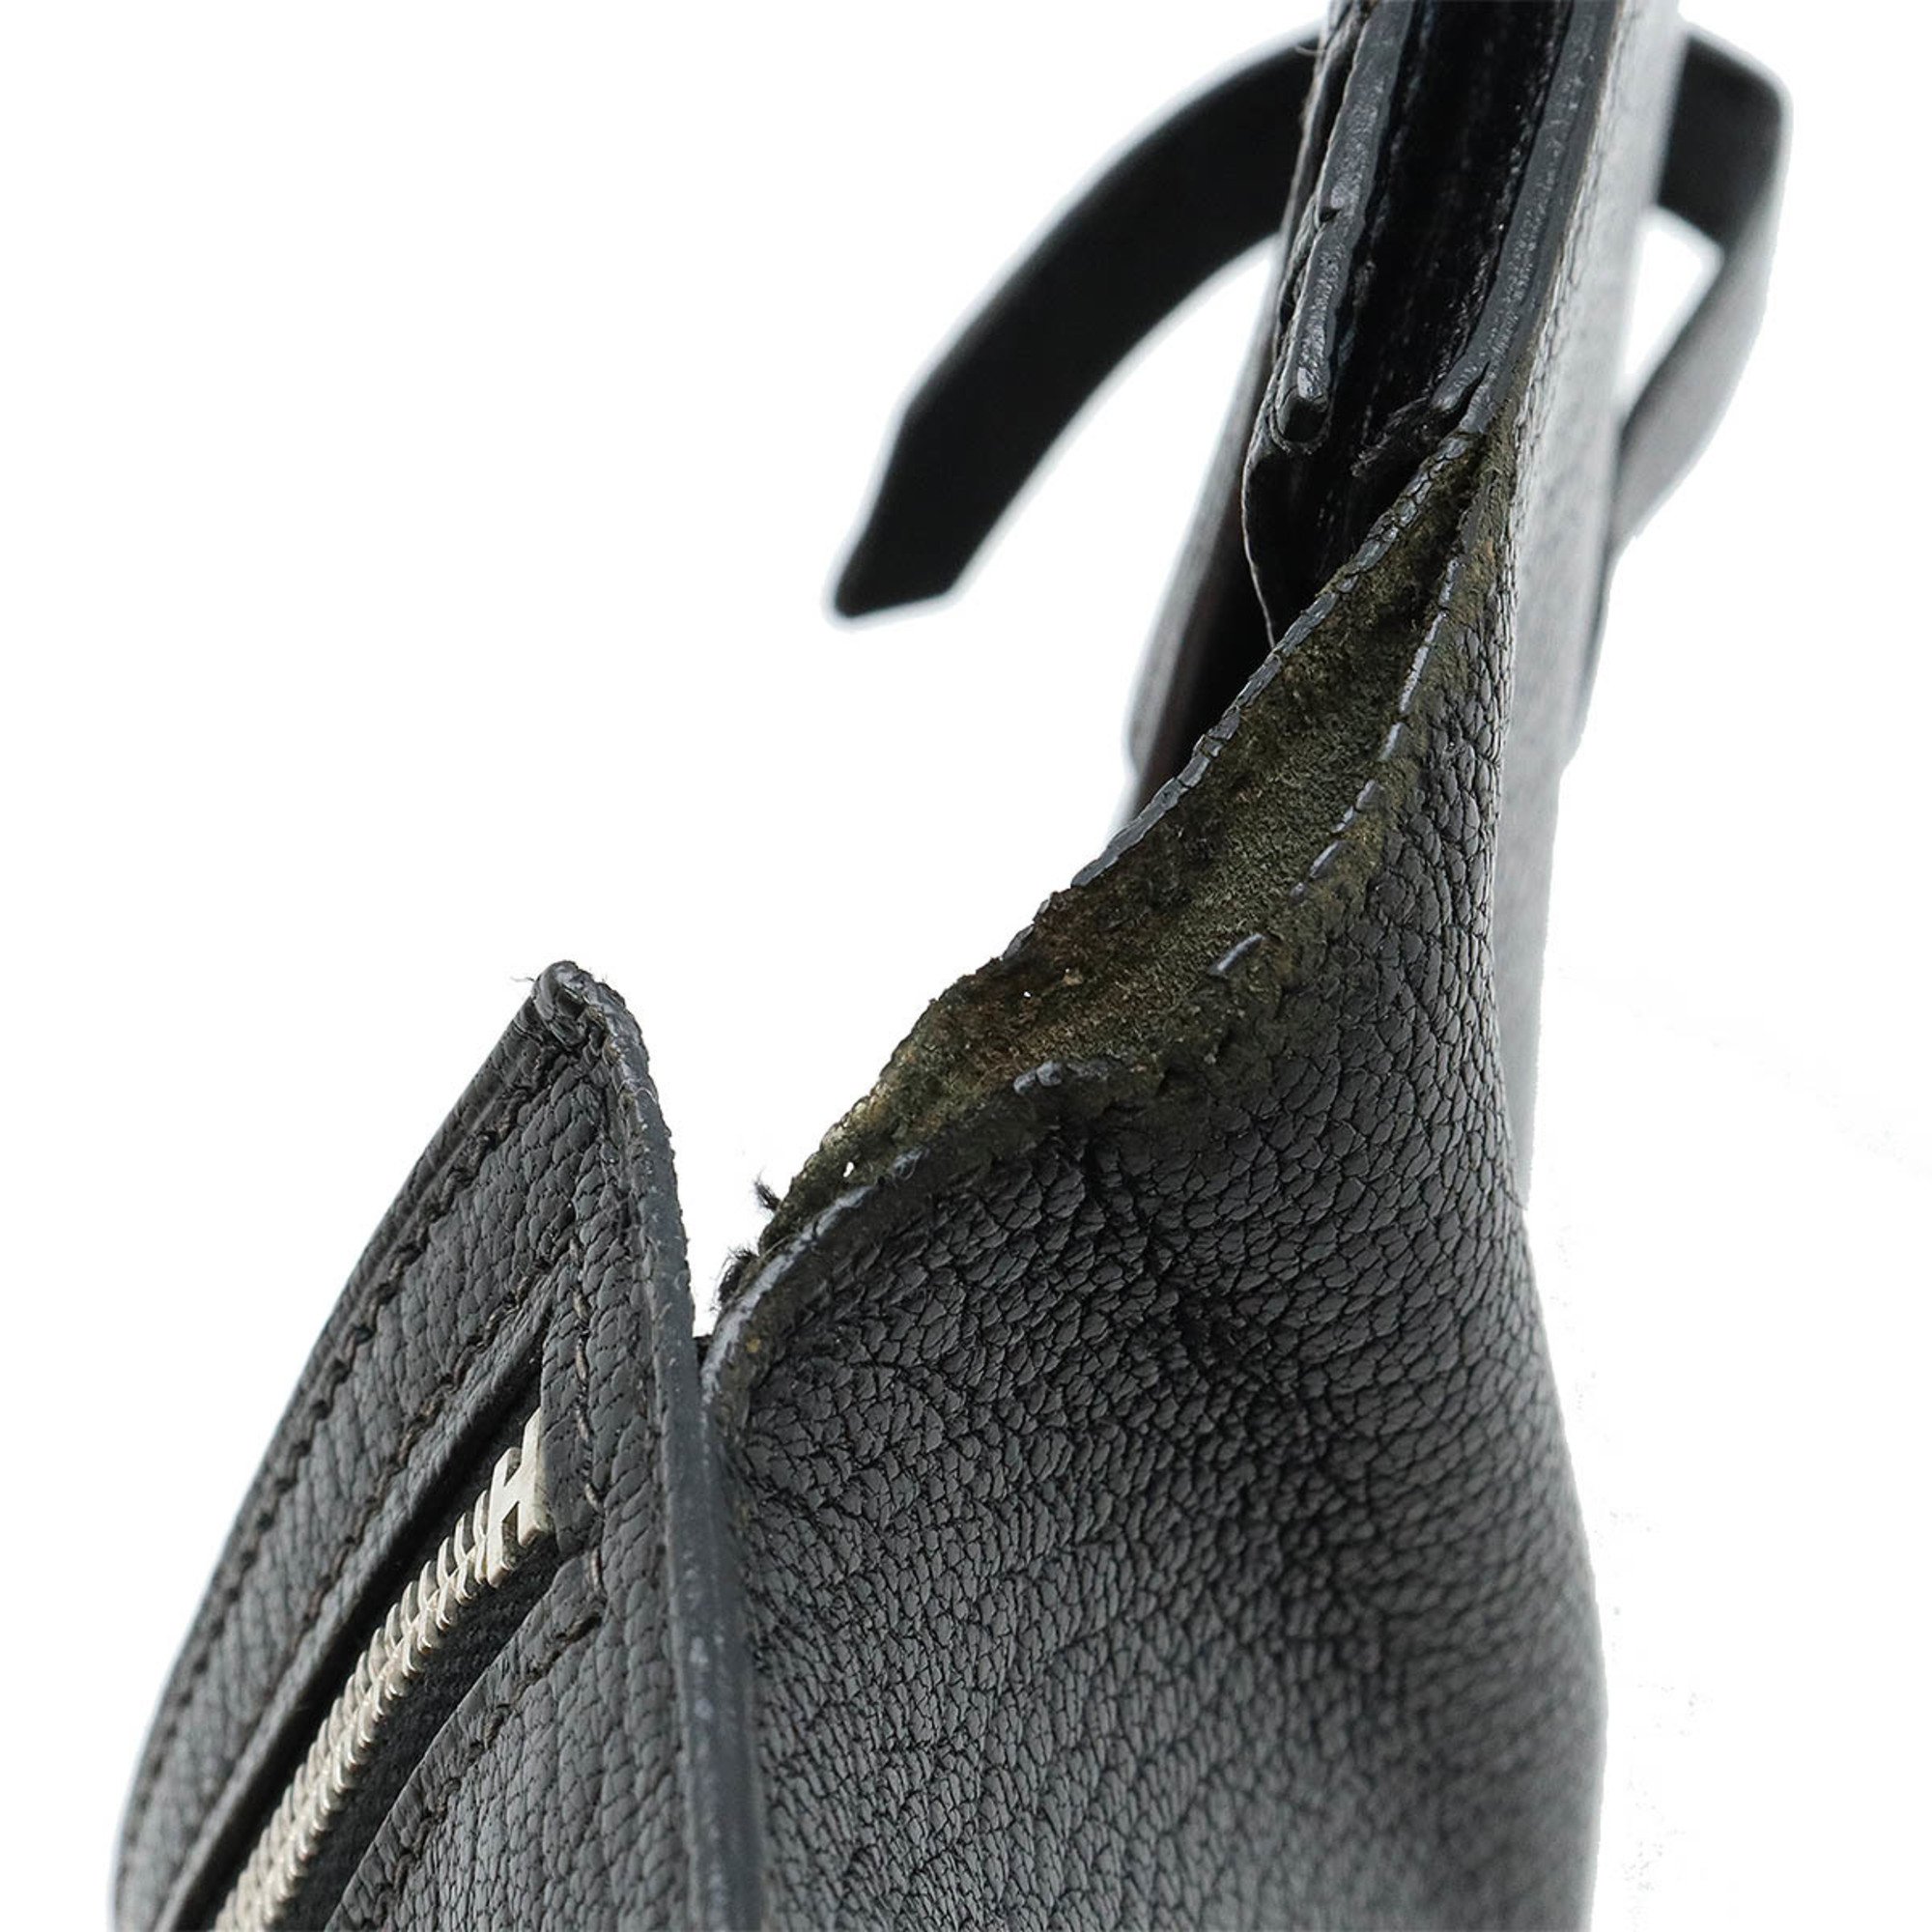 HERMES Bearn Soufflet Bi-fold Long Wallet Chevre Leather Black J Stamp